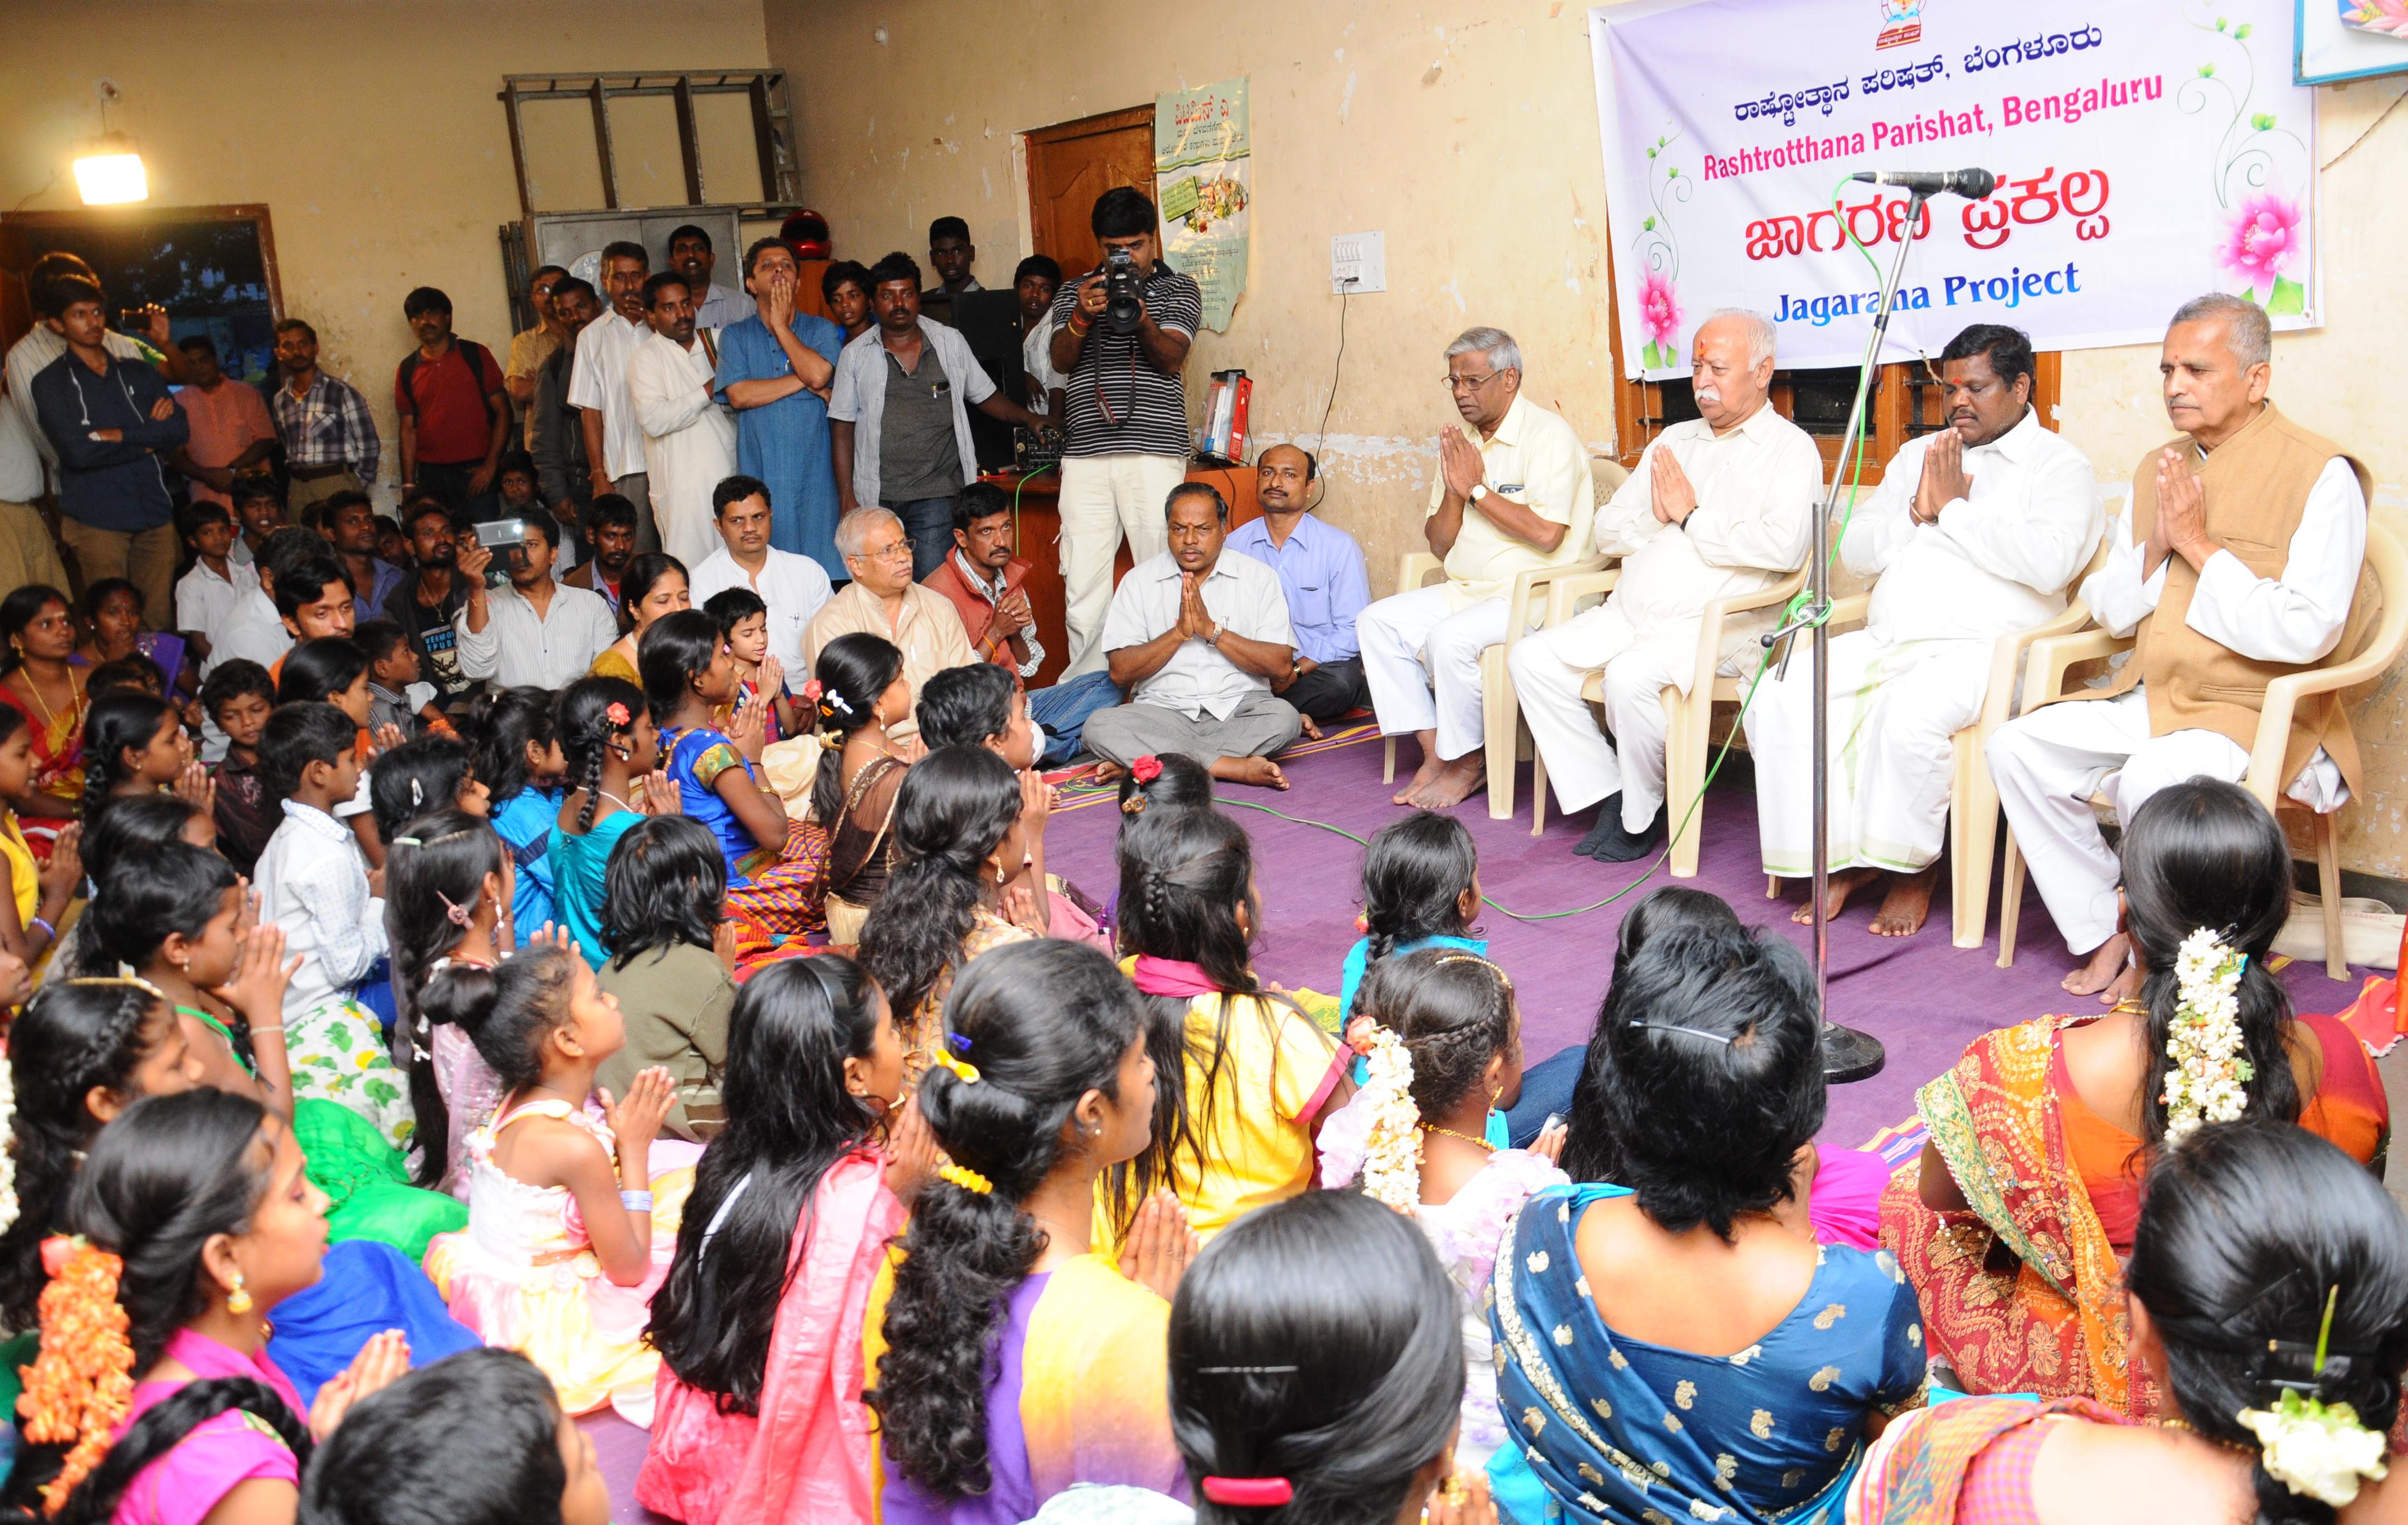 RSS Sarasanghachalak Mohan Bhagwat interacted with children at Hombegoudanagar Slum, Bengaluru on November 14, 2014